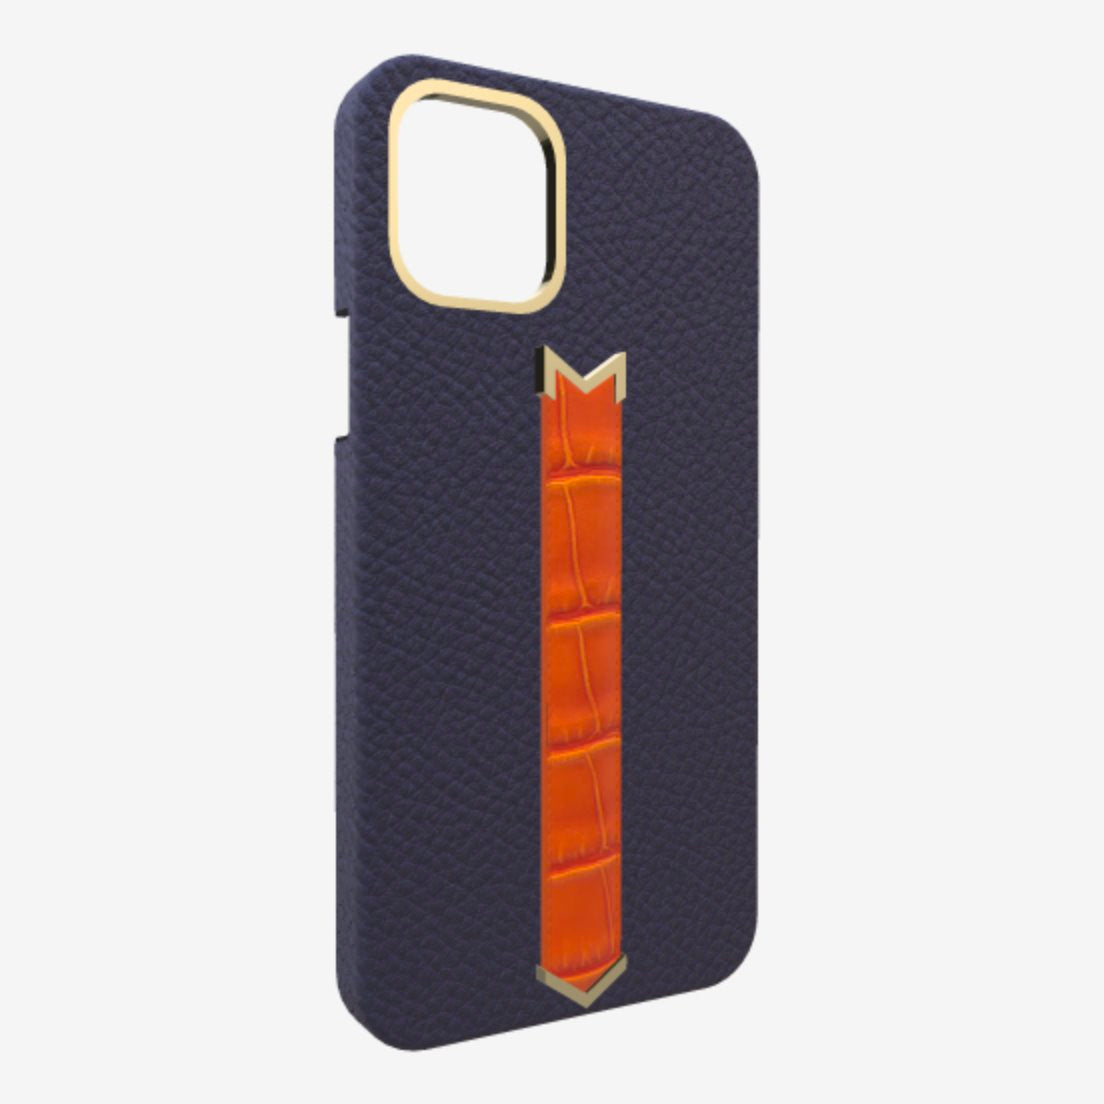 Gold Finger Strap Case for iPhone 13 in Genuine Calfskin and Alligator Navy Blue Orange Cocktail 